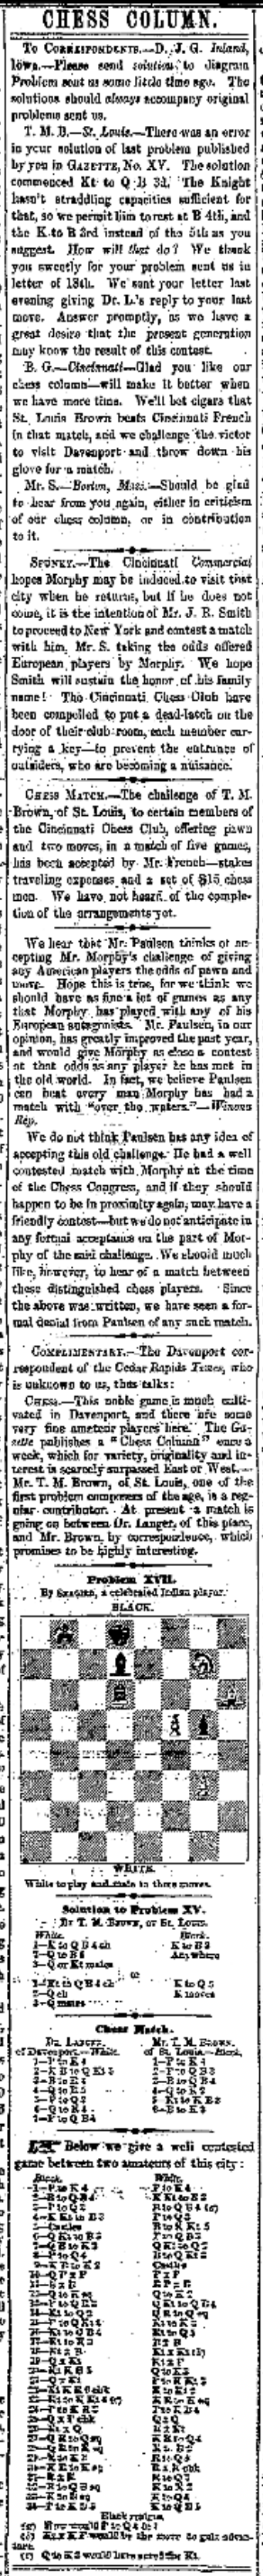 1859.04.25-01 Davenport Daily Gazette.png